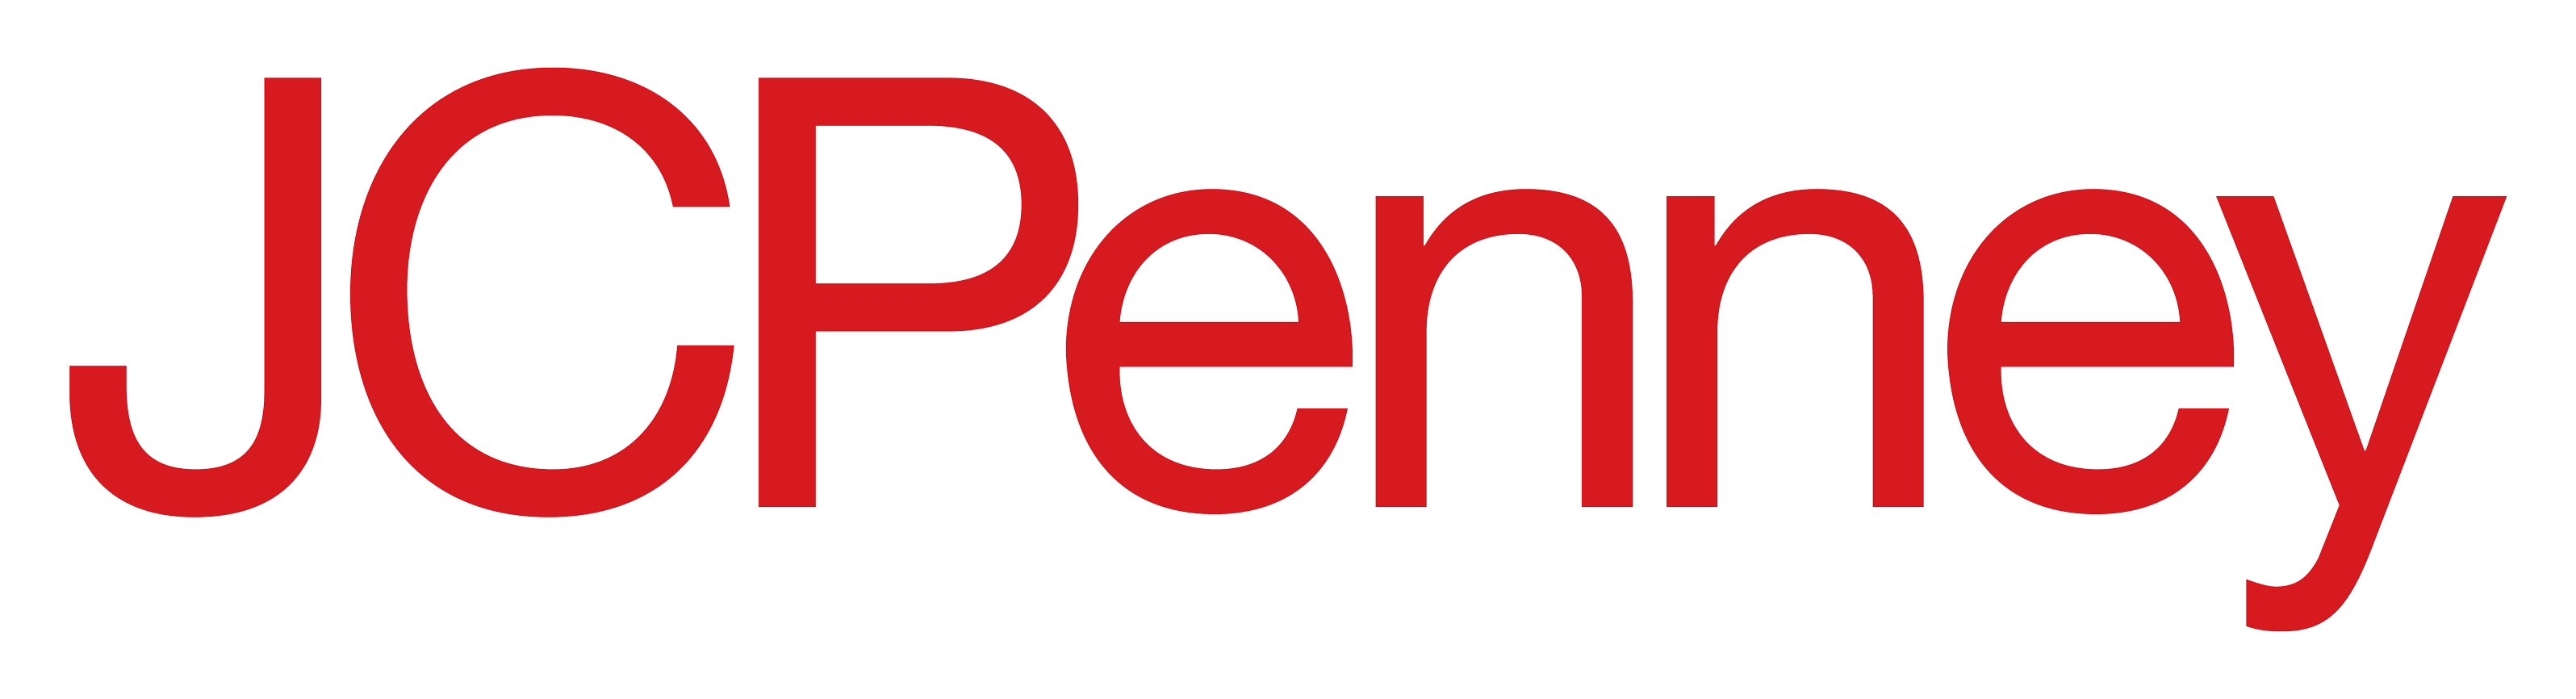 jcpenney logo